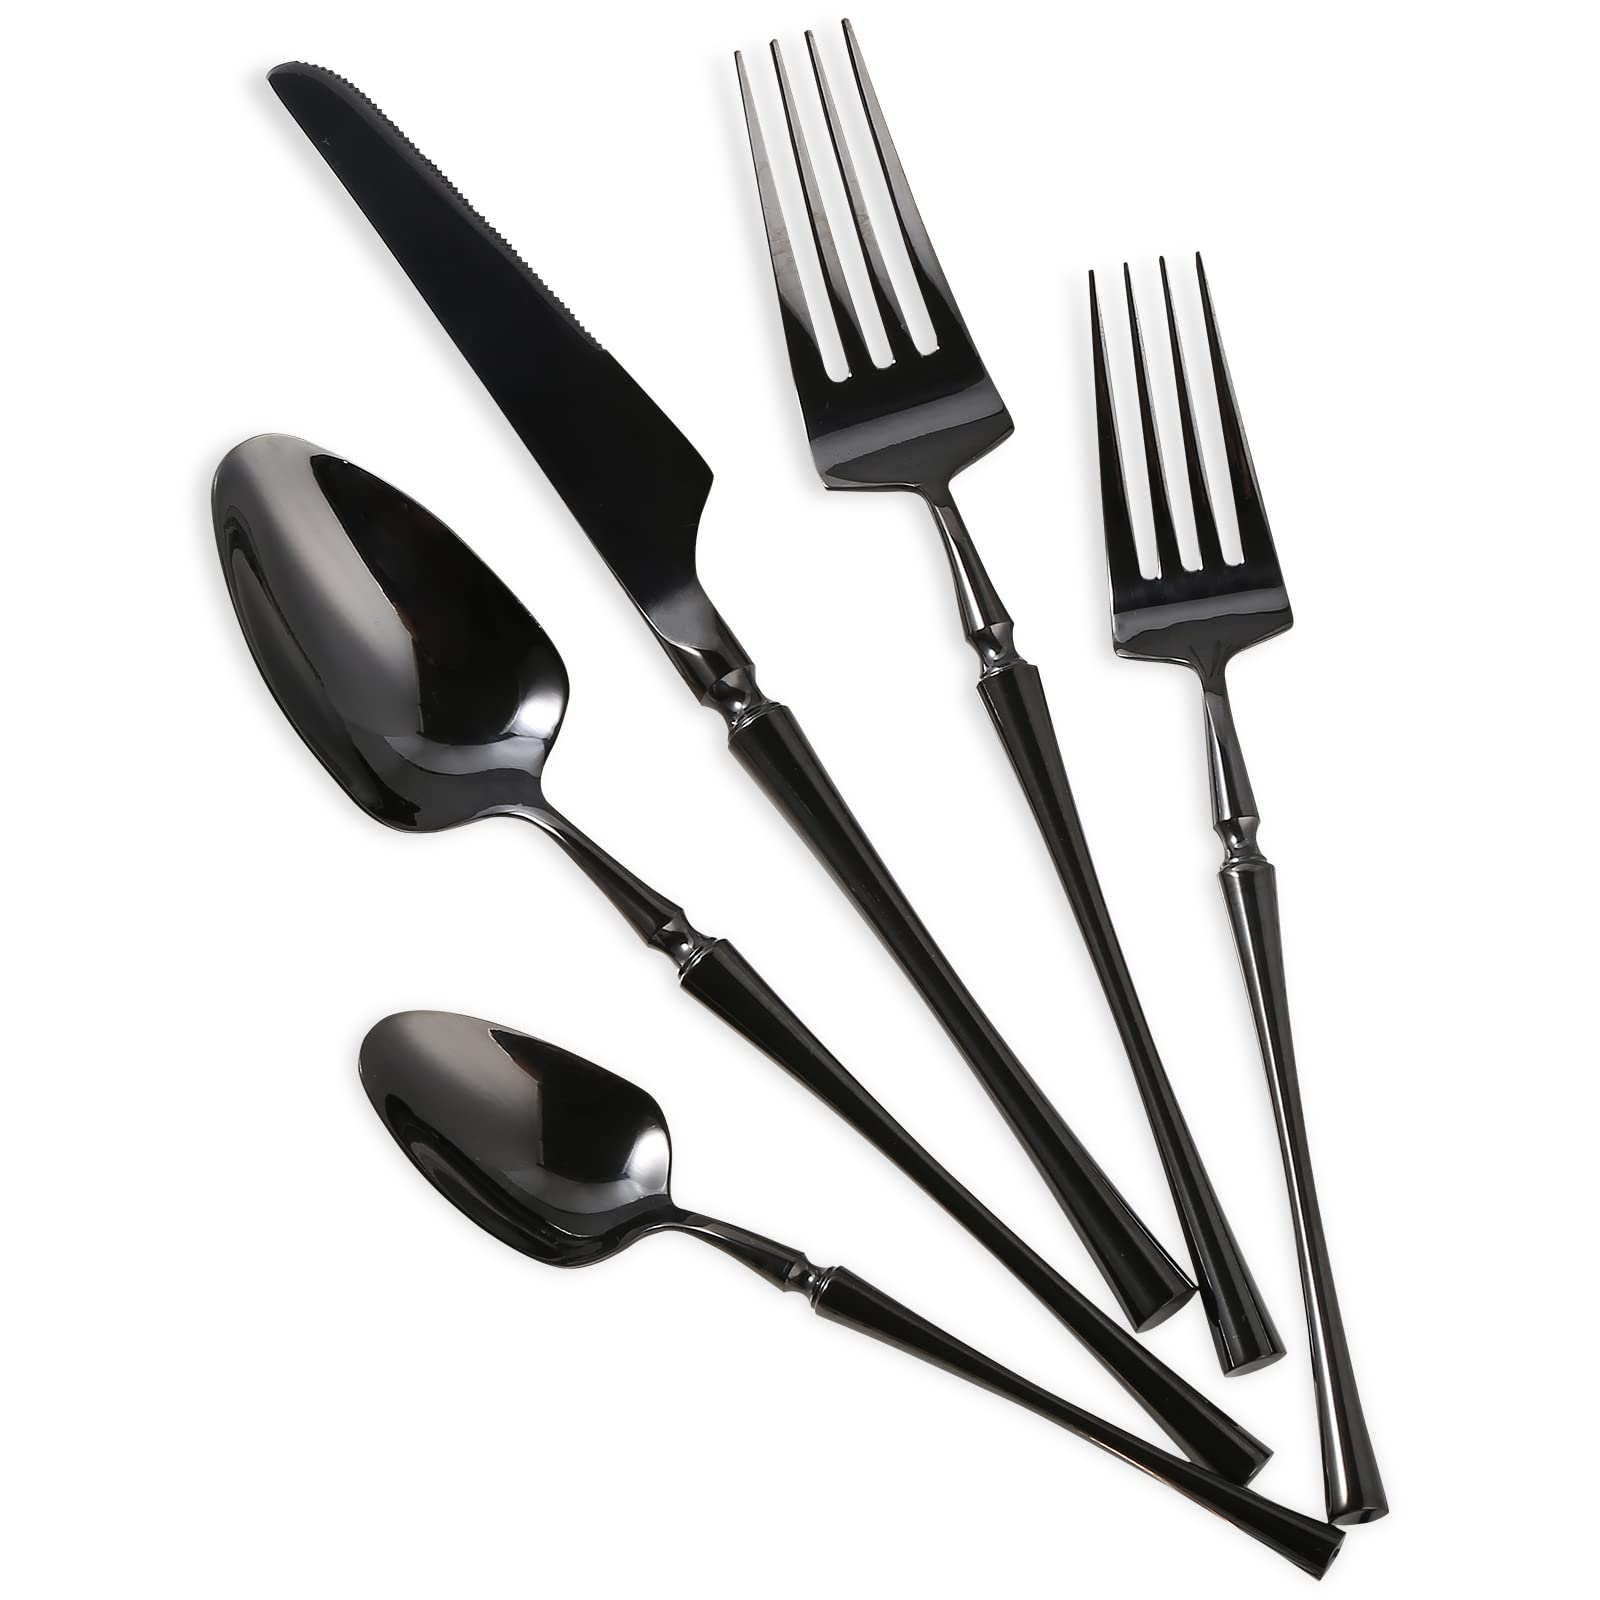 HDZINS 20-Piece Flatware Set Stainless Steel 18/10 Silverware Cutlery Set Service for 4, Tableware Cutlery Set for Home and Restaurant, Dishwasher Safe (Black)